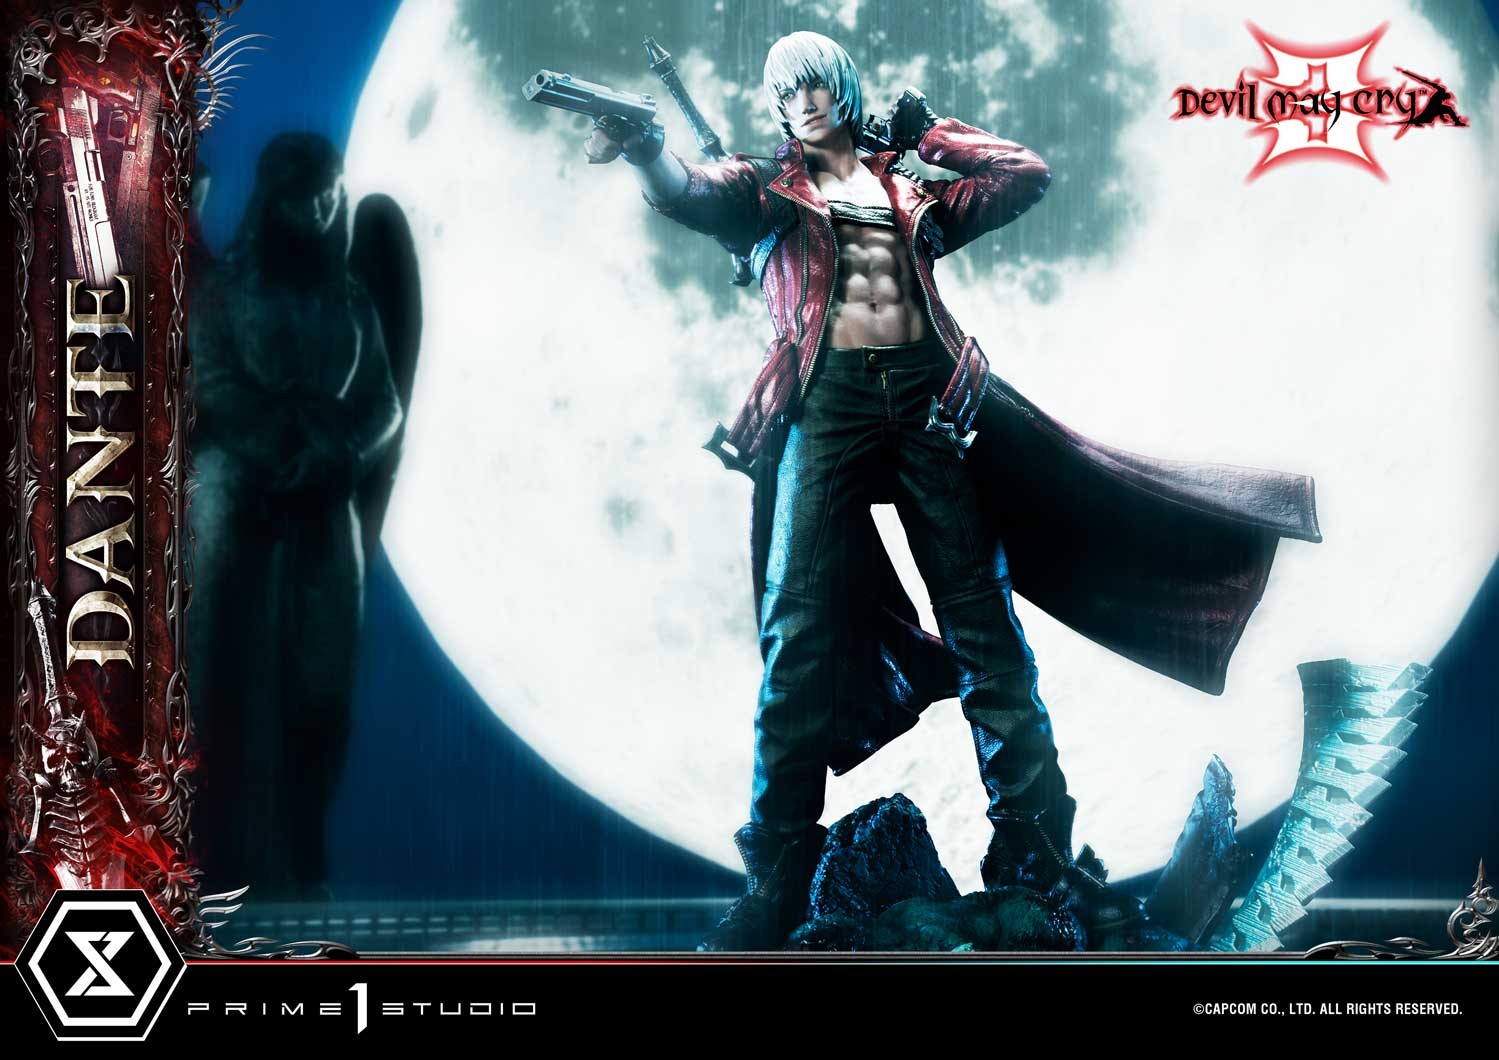 Devil May Cry: Prime 1 revela estatueta realista de Dante